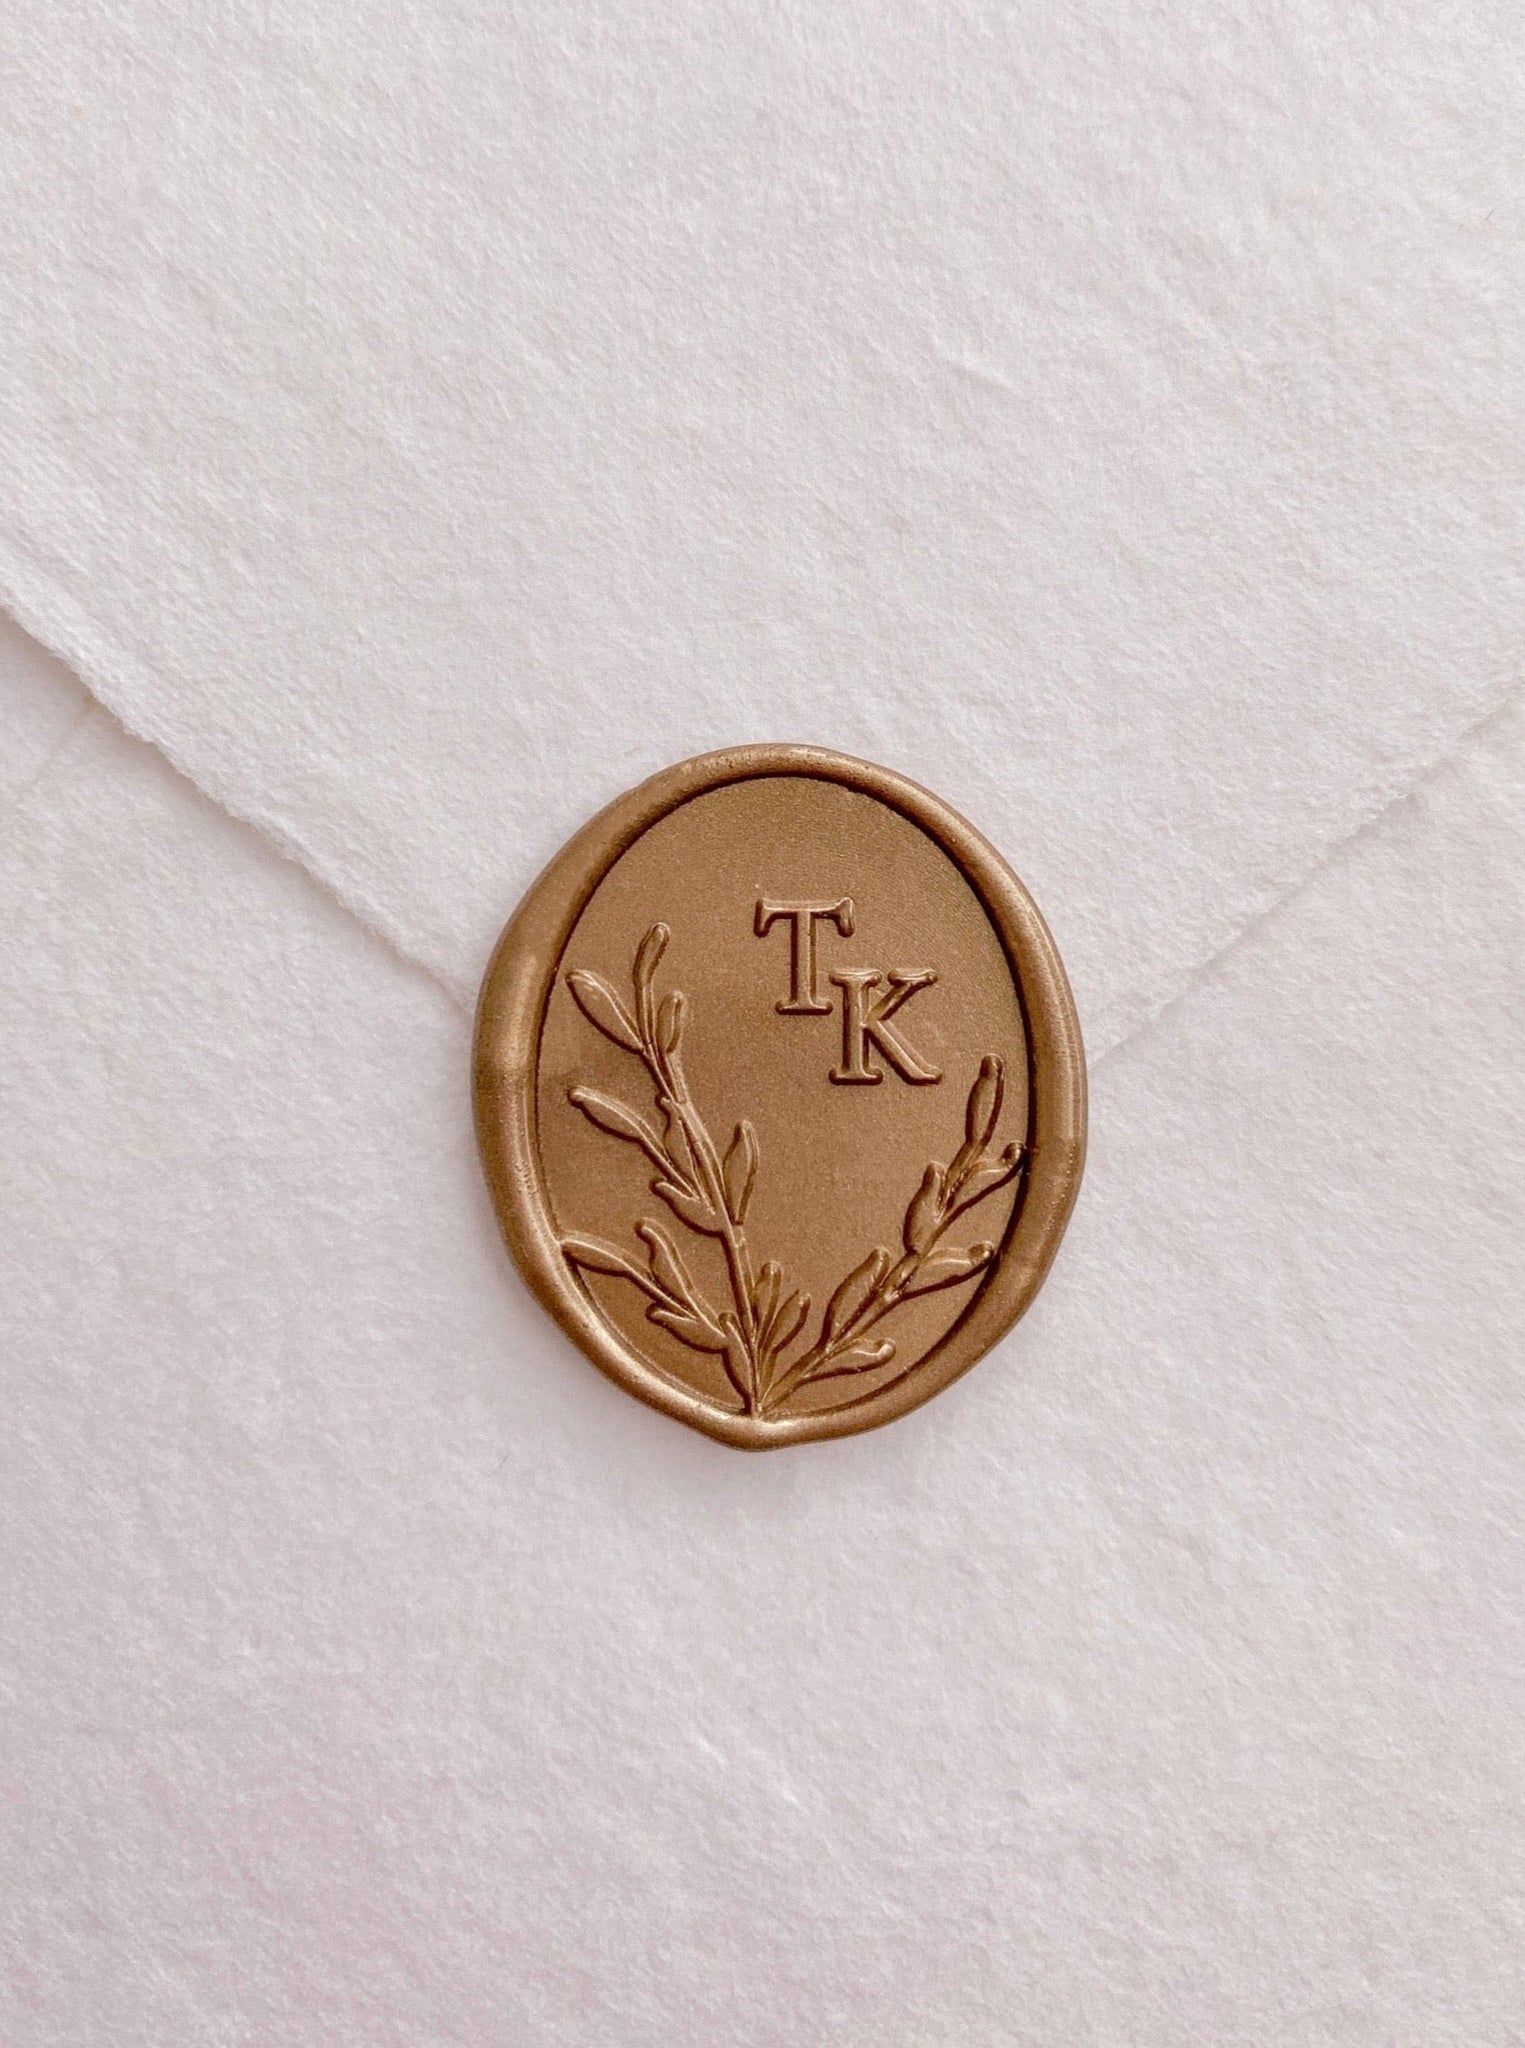 Oval leaves wreath monogram wax seal in gold on handmade paper envelope